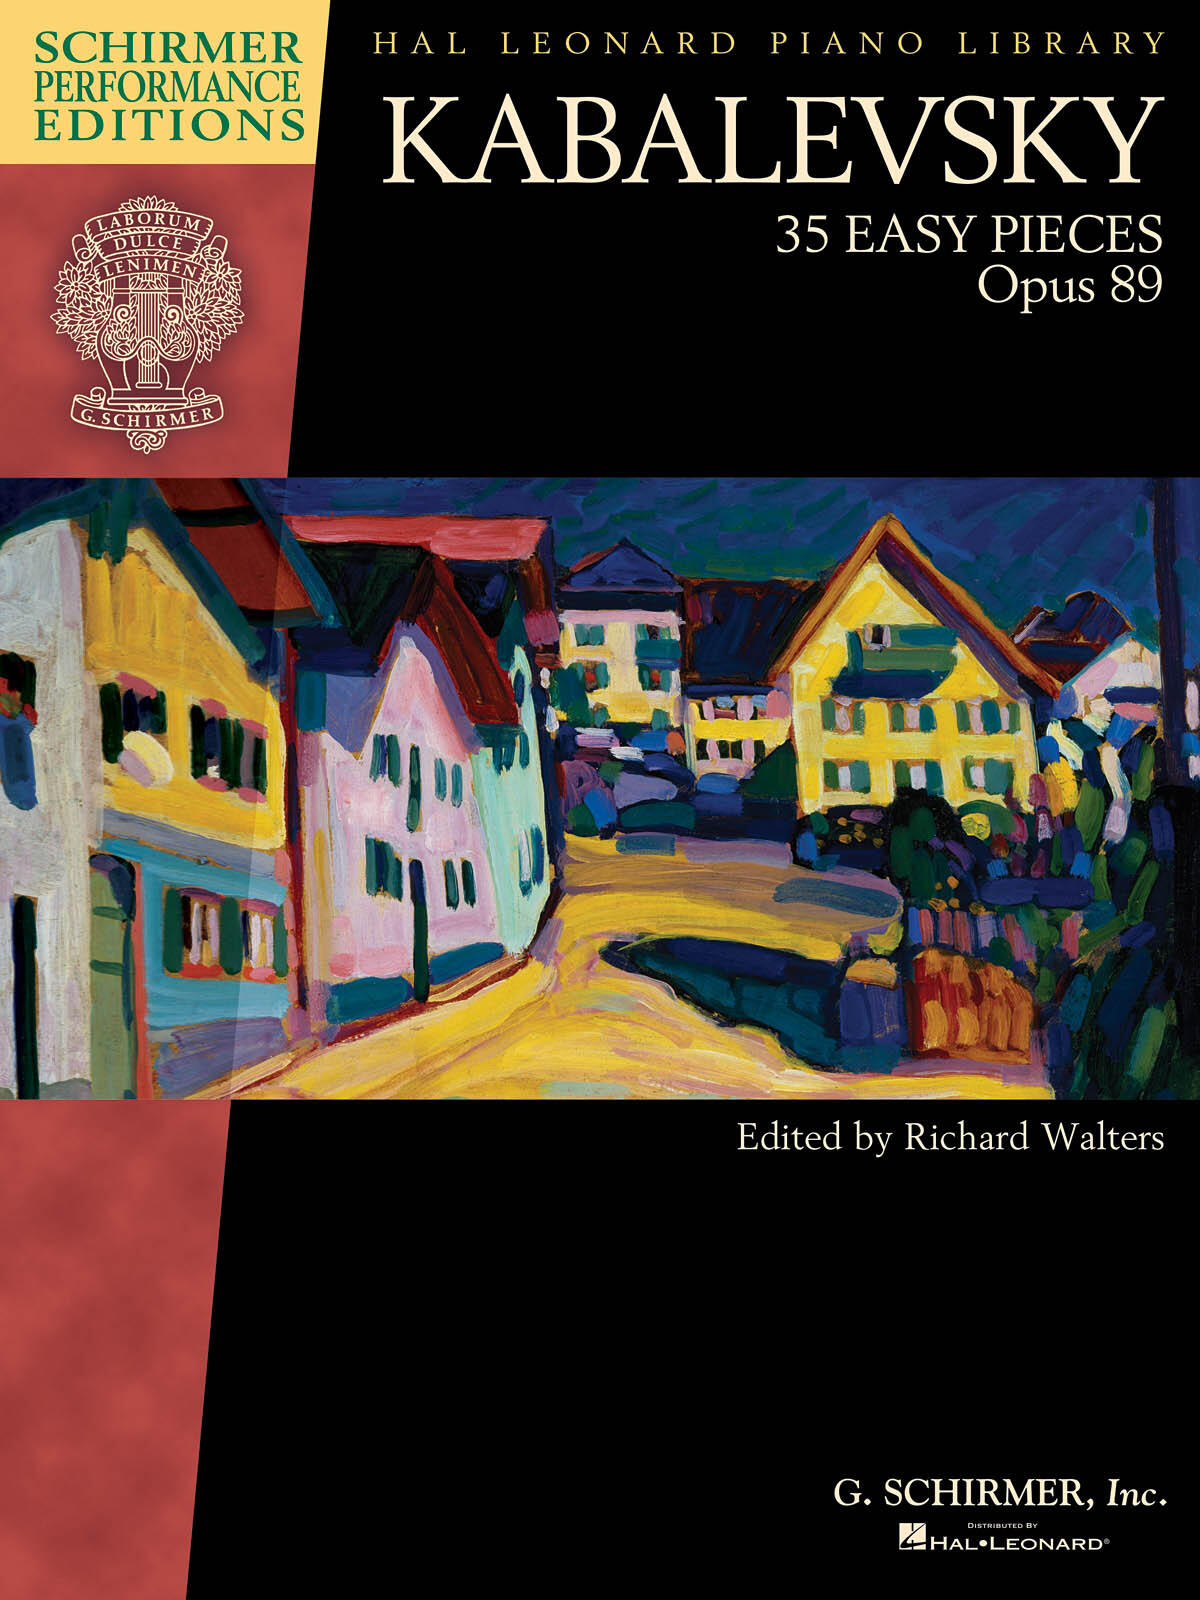 Kabalevsky - 35 Easy Pieces, Op. 89 for Piano  Dmitri Kabalevsky Richard Walters Klavier Buch  HL00297101 (HL00297101) : photo 1